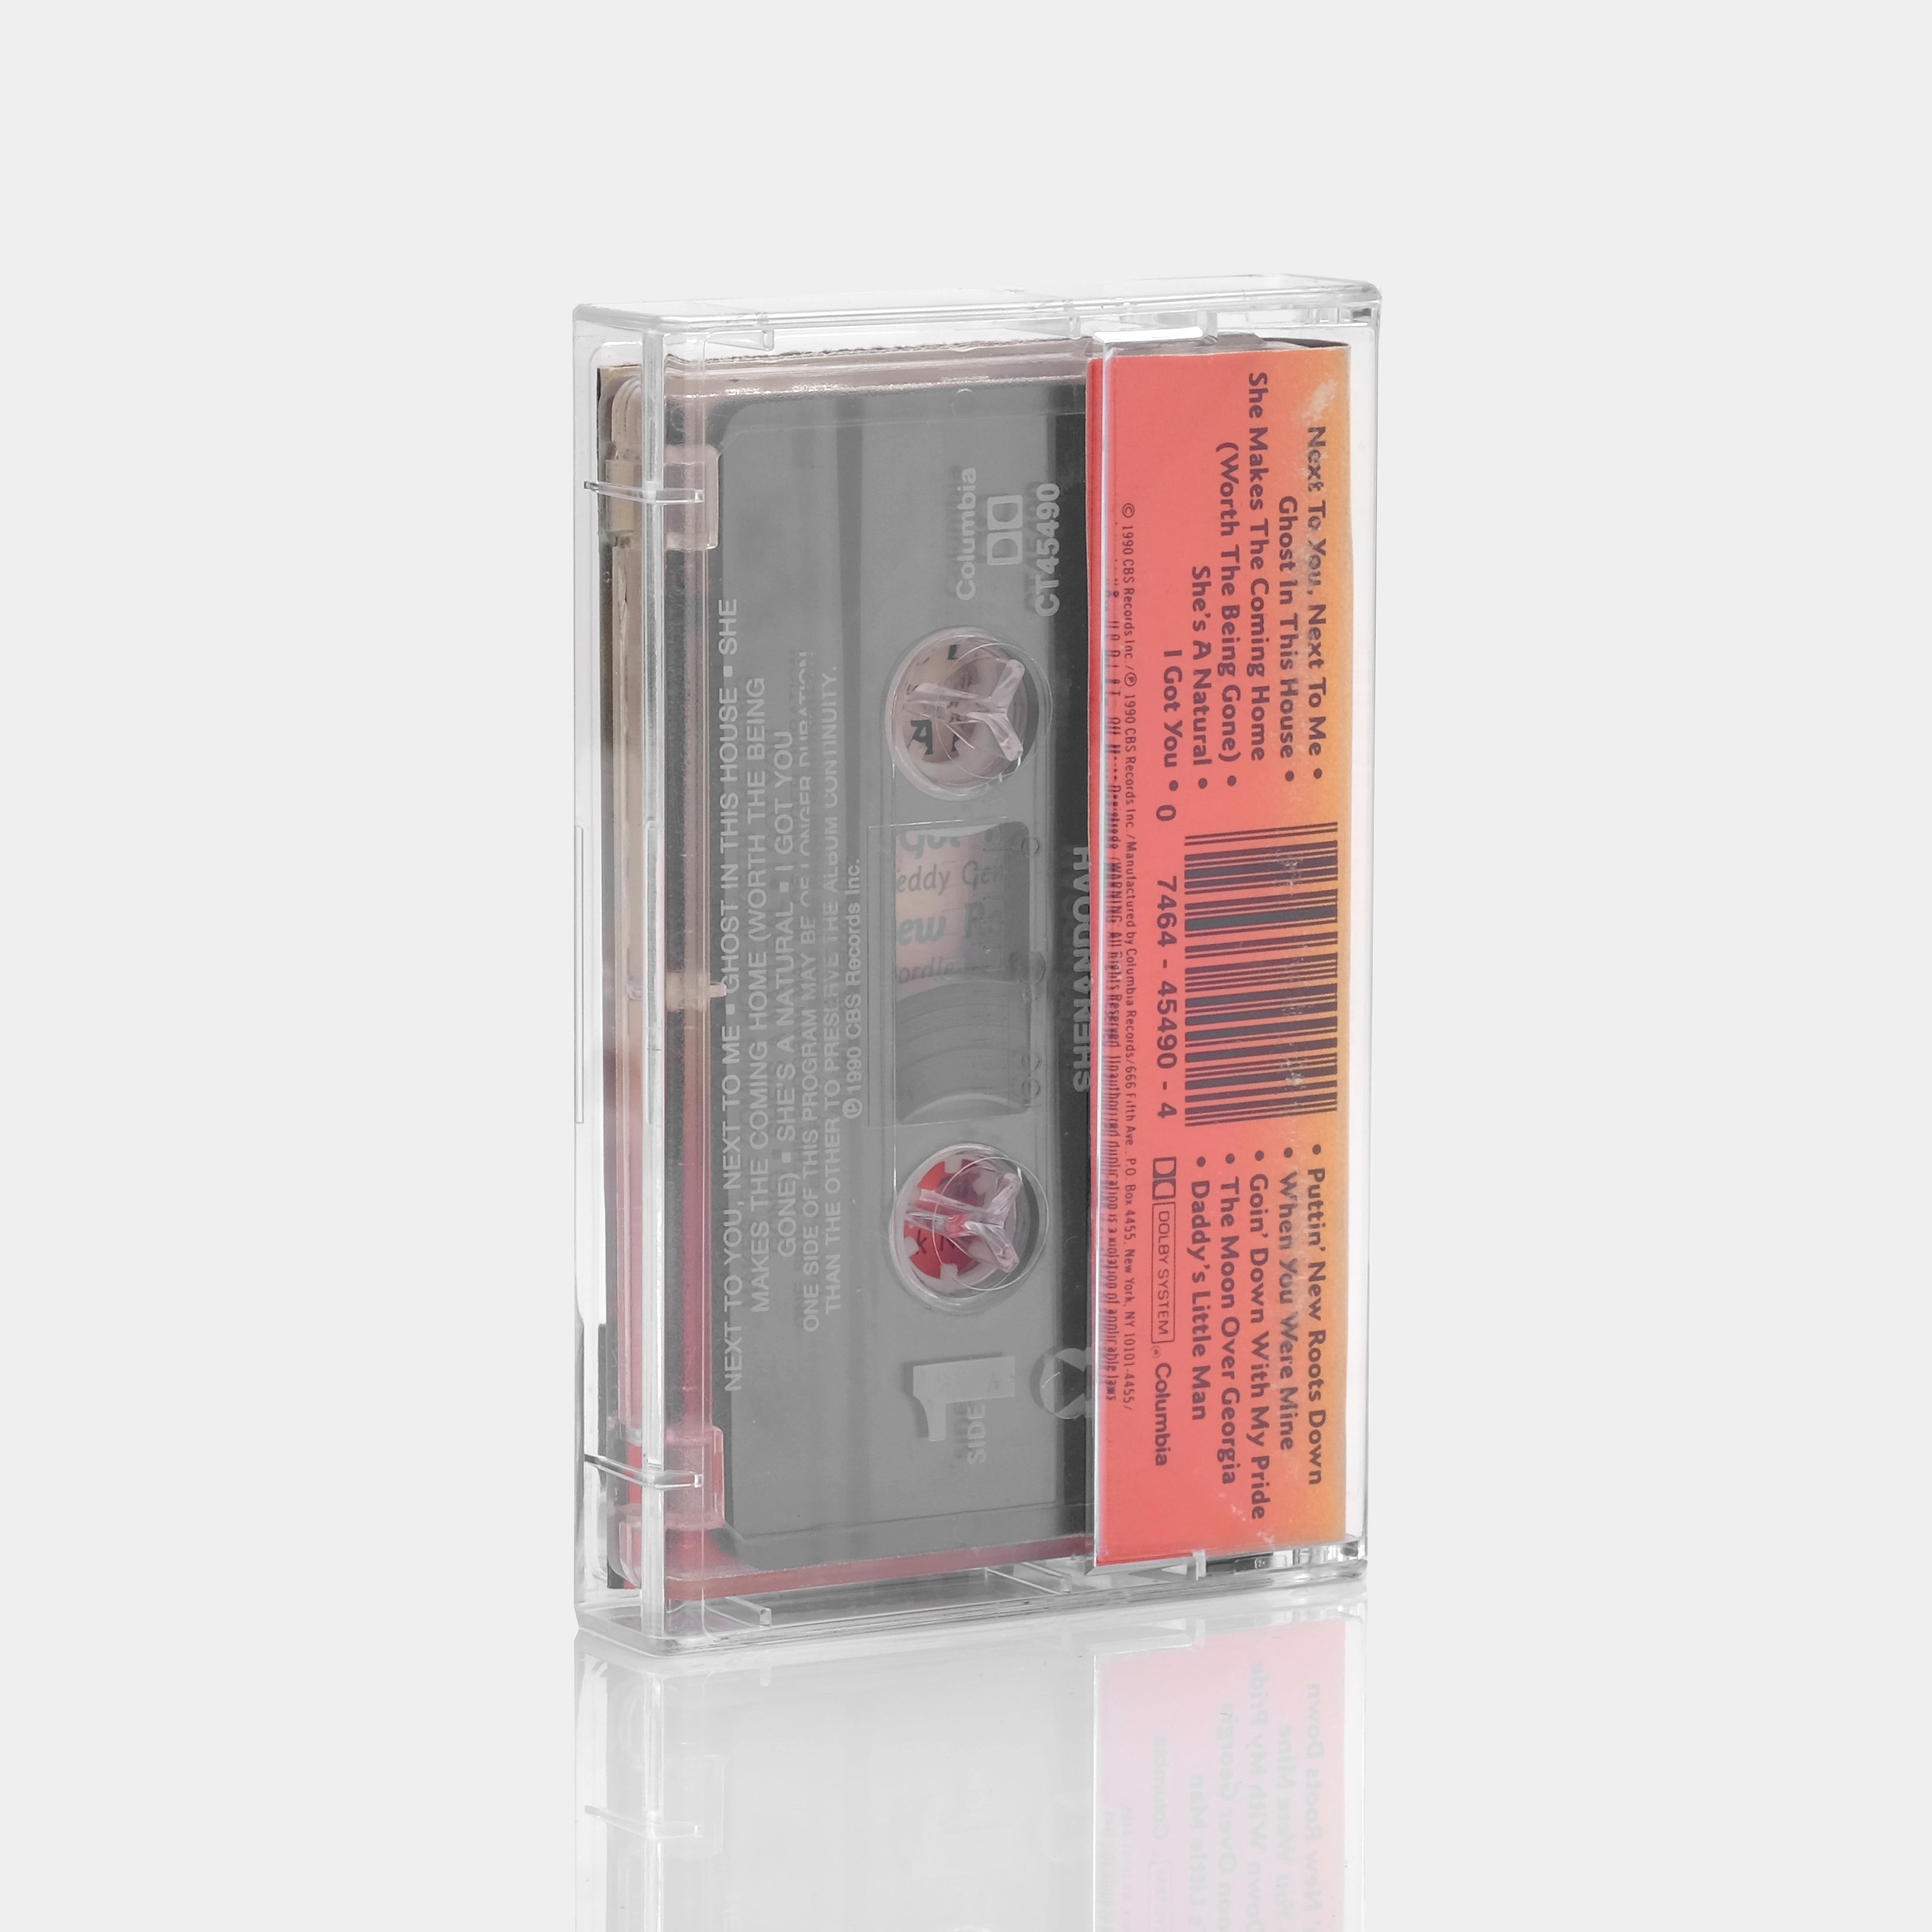 Shenandoah - Extra Mile Cassette Tape